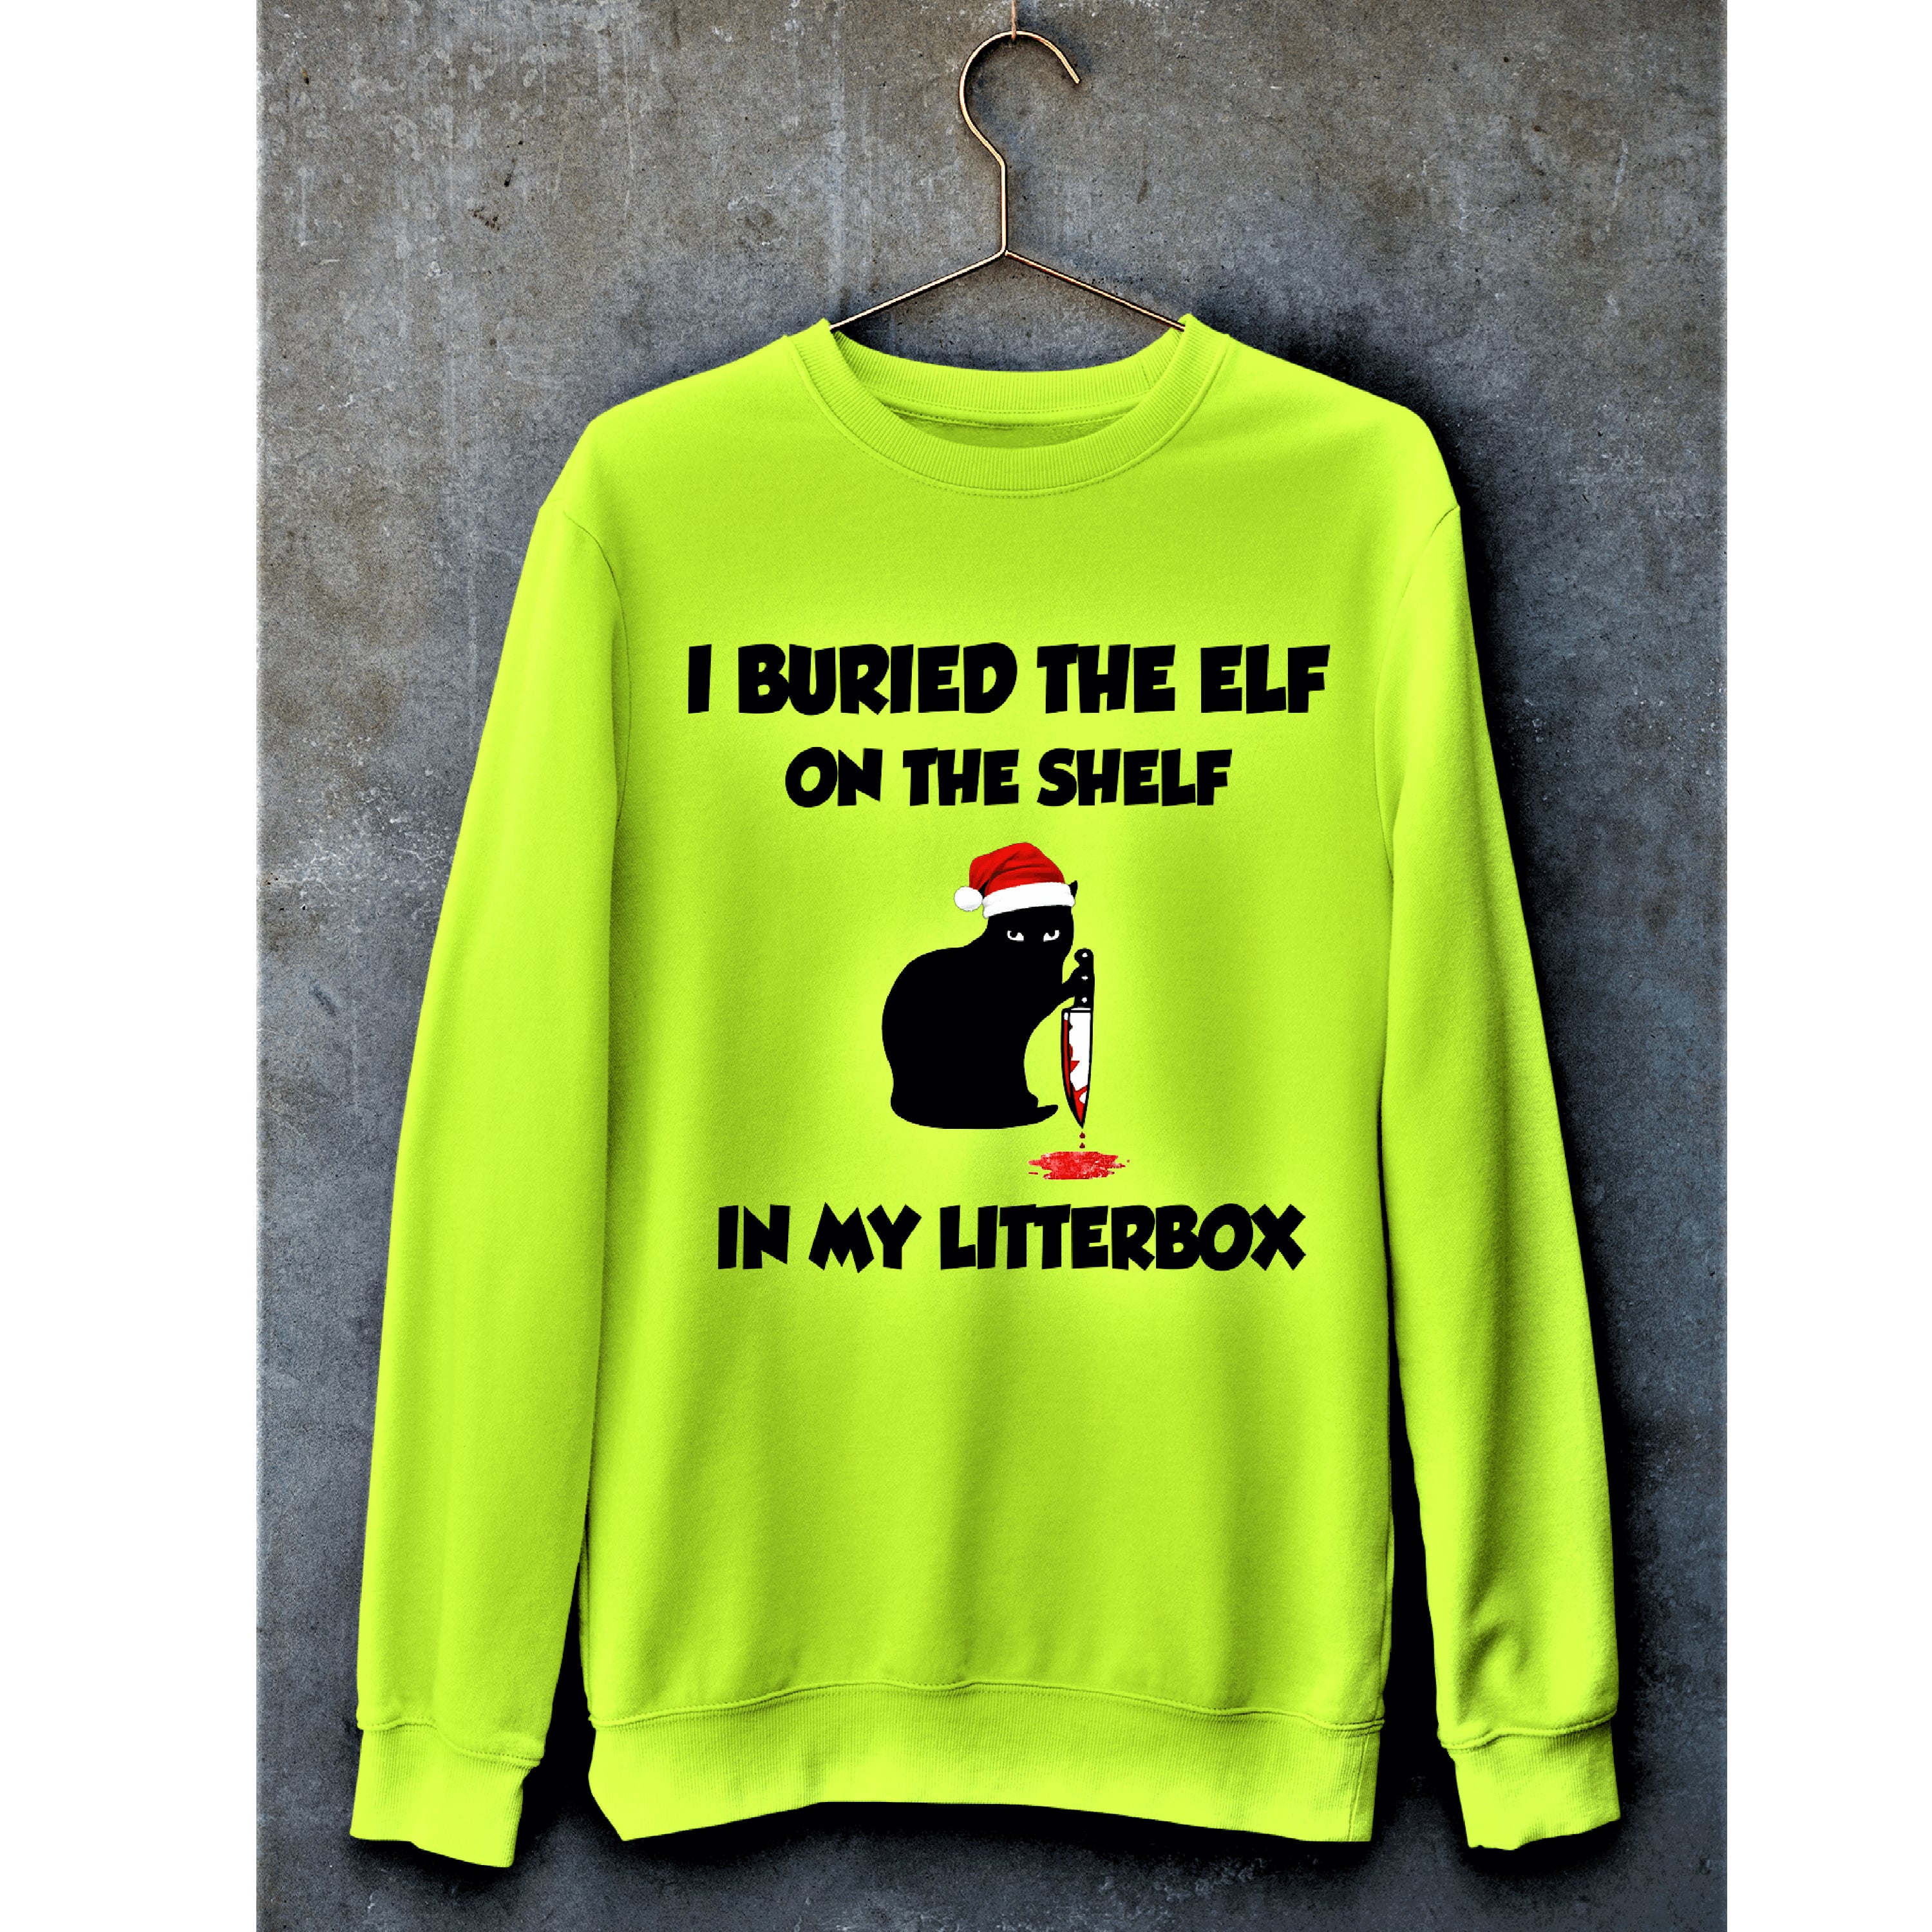 "I BURIED THE ELF ON THE SHELF"- Hoodie & Sweatshirt.